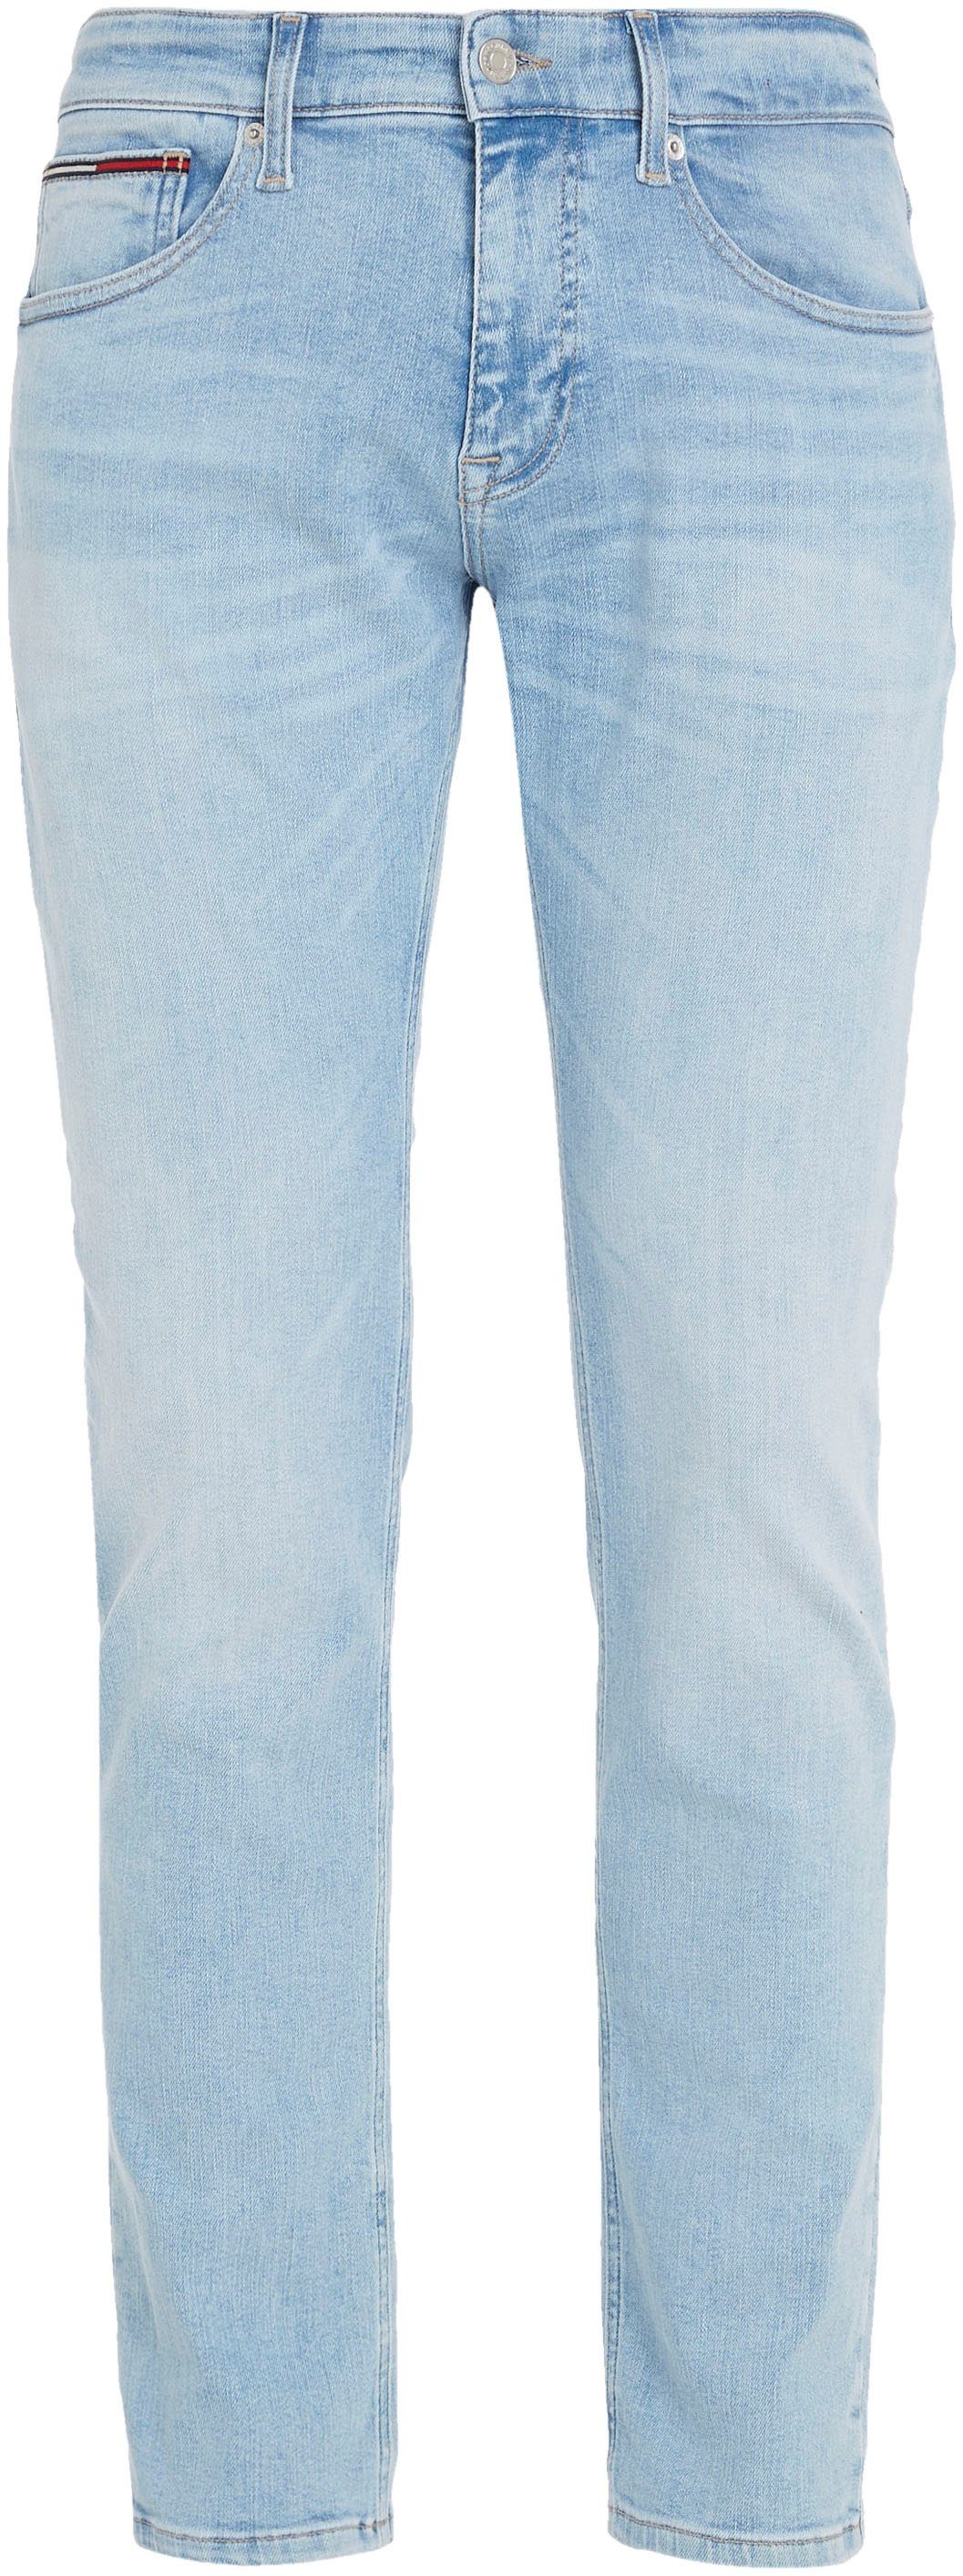 d.light Jeans Slim-fit-Jeans SCANTON Tommy